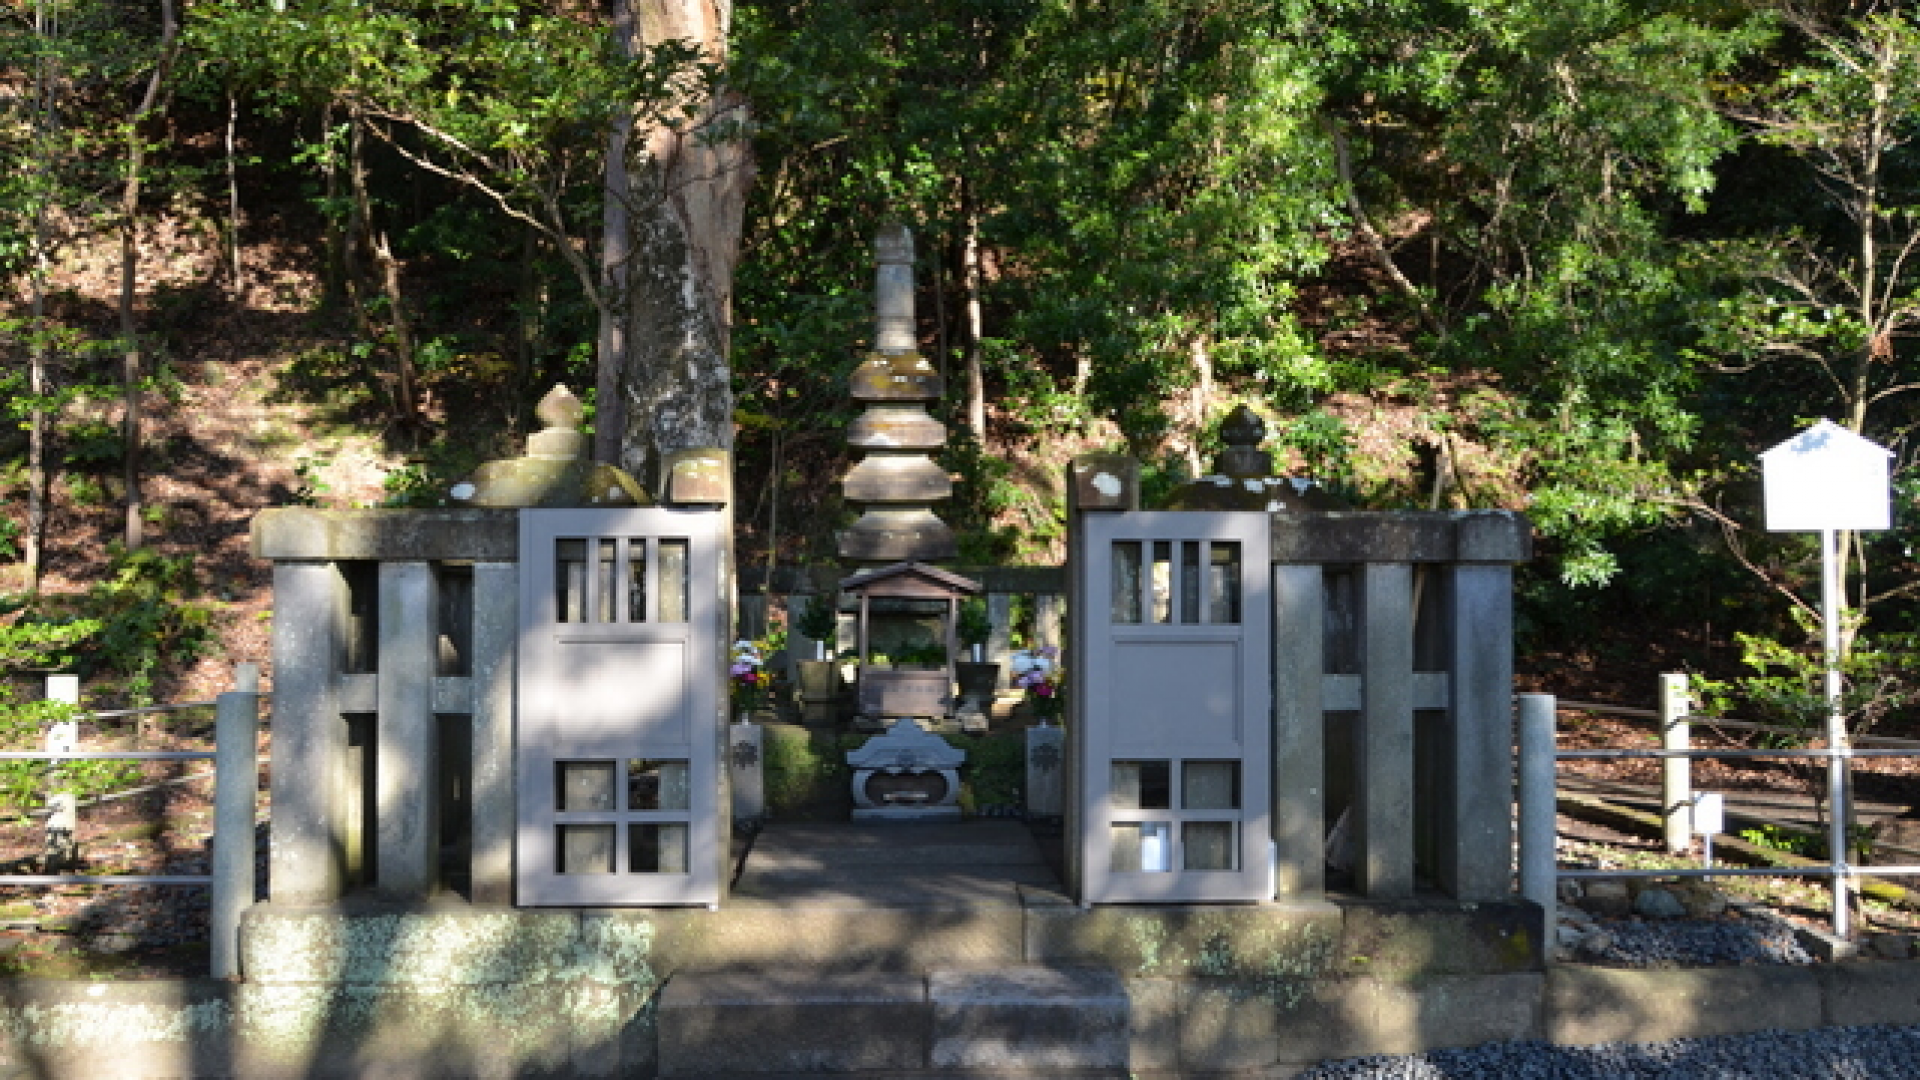 Tombeaux de Minamotono Yoritomo